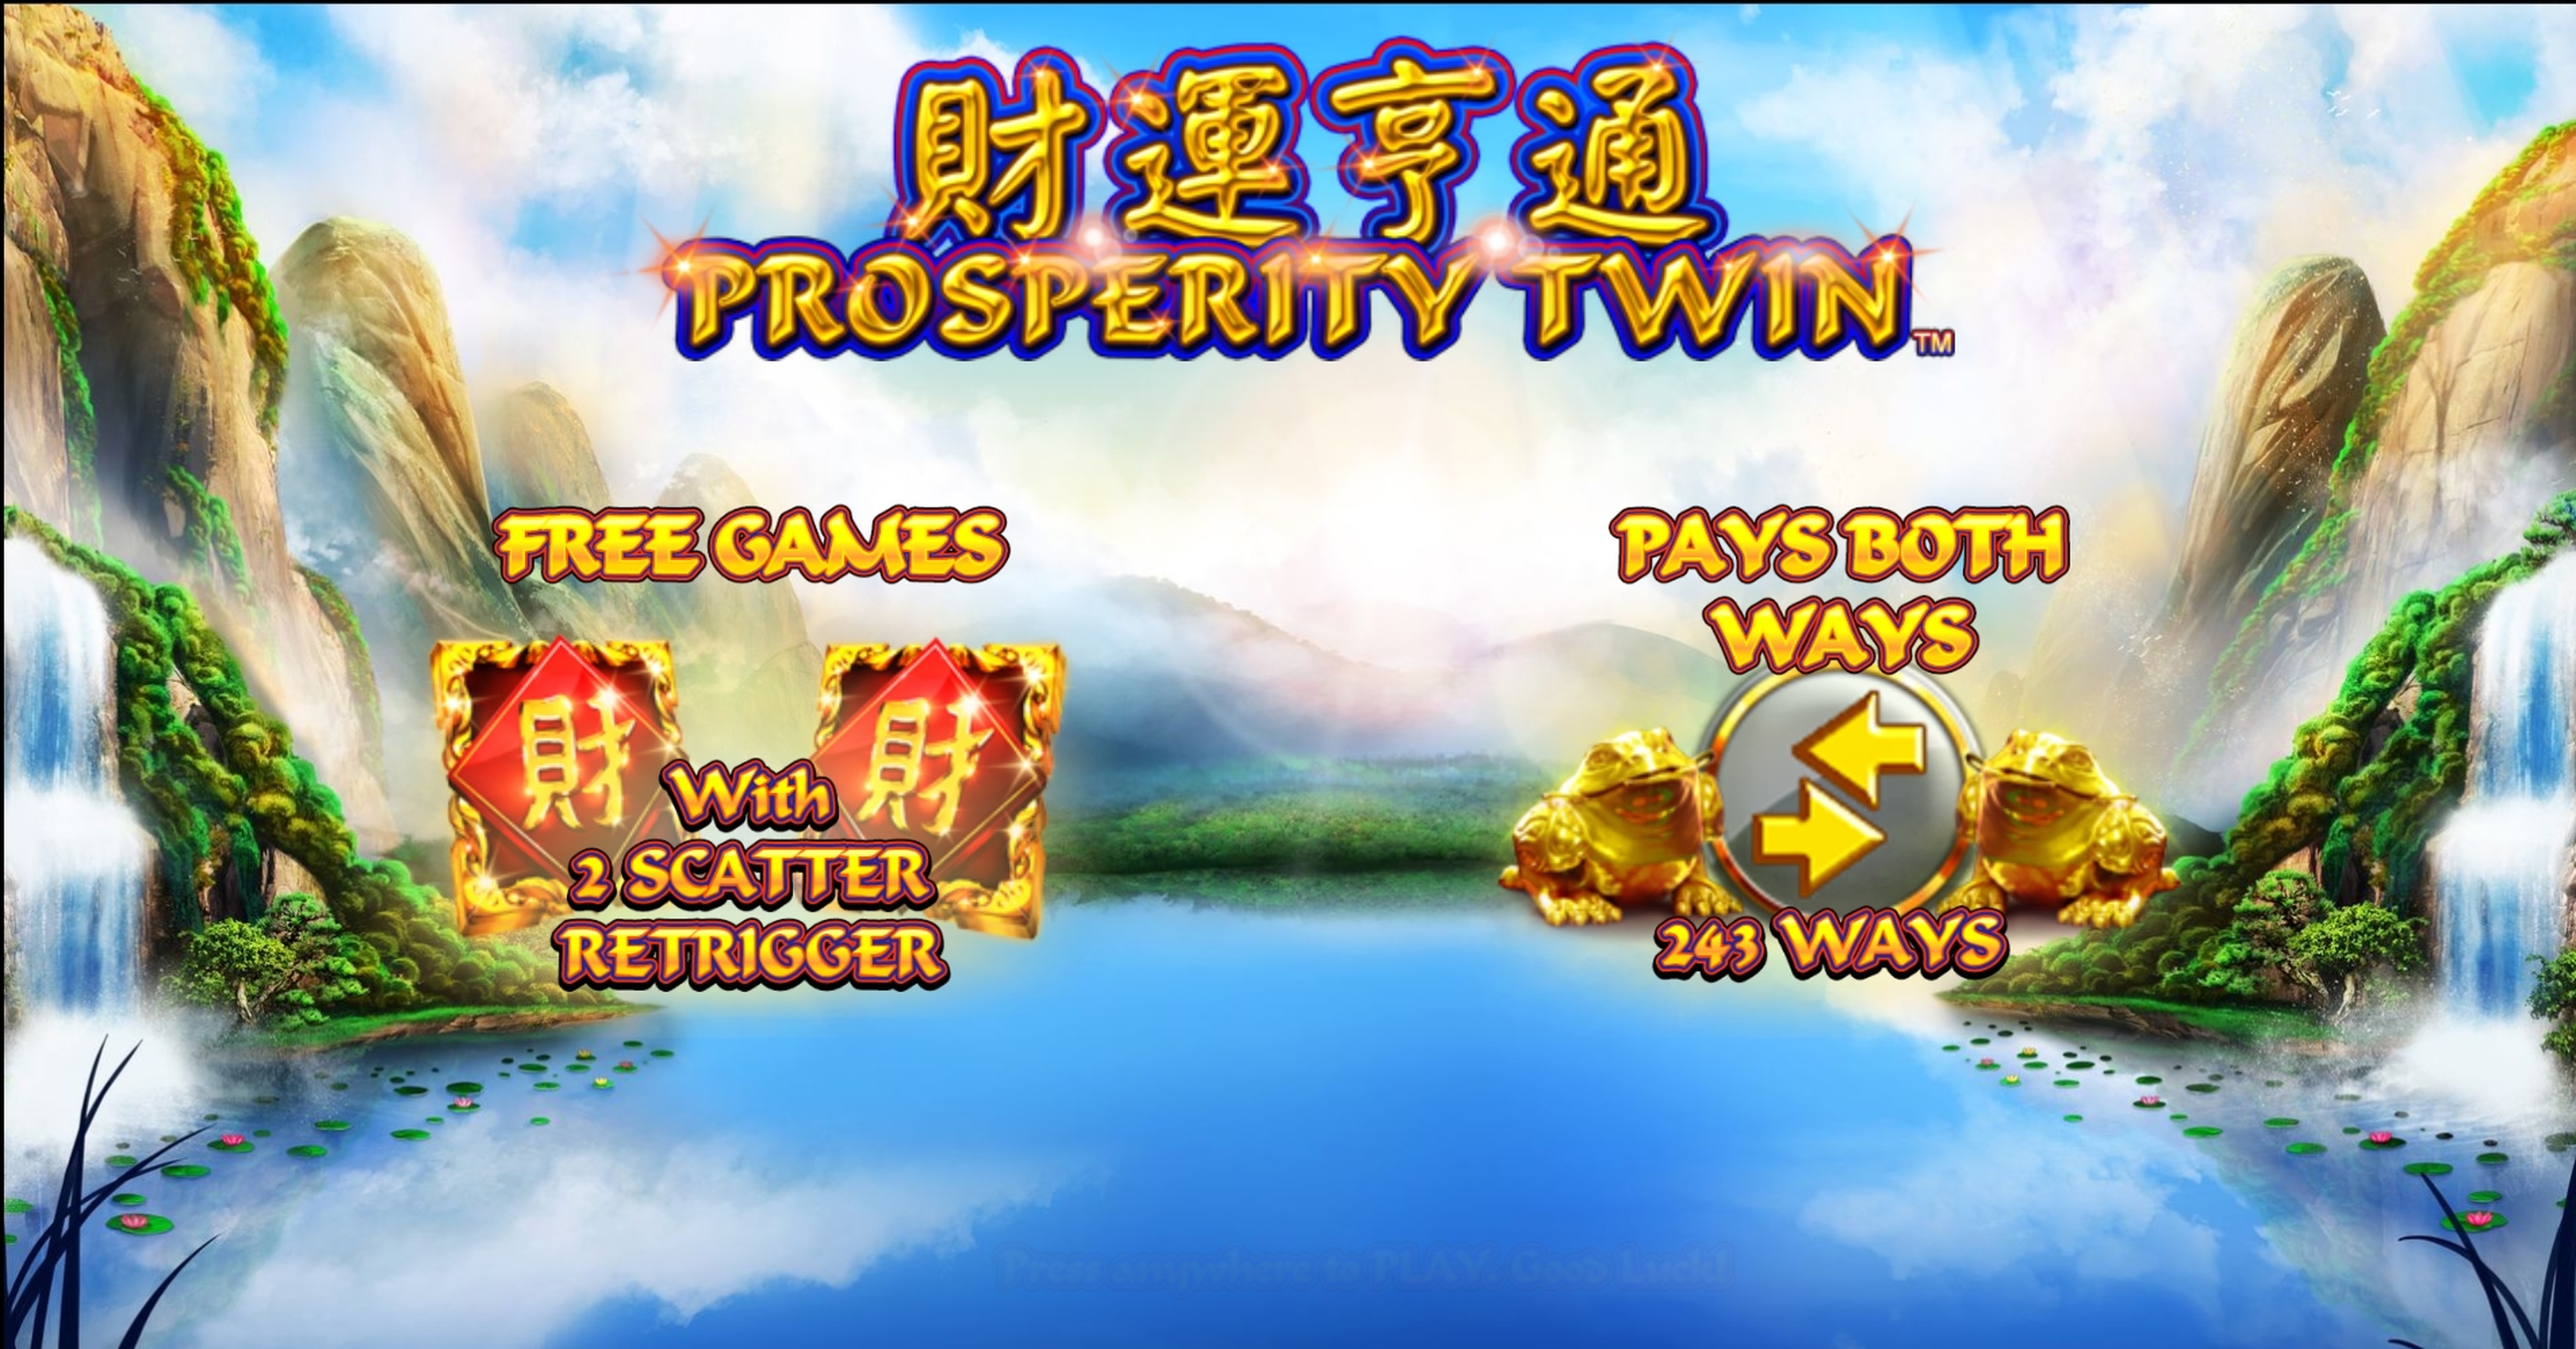 Play Prosperity Twin Free Casino Slot Game by NextGen Gaming